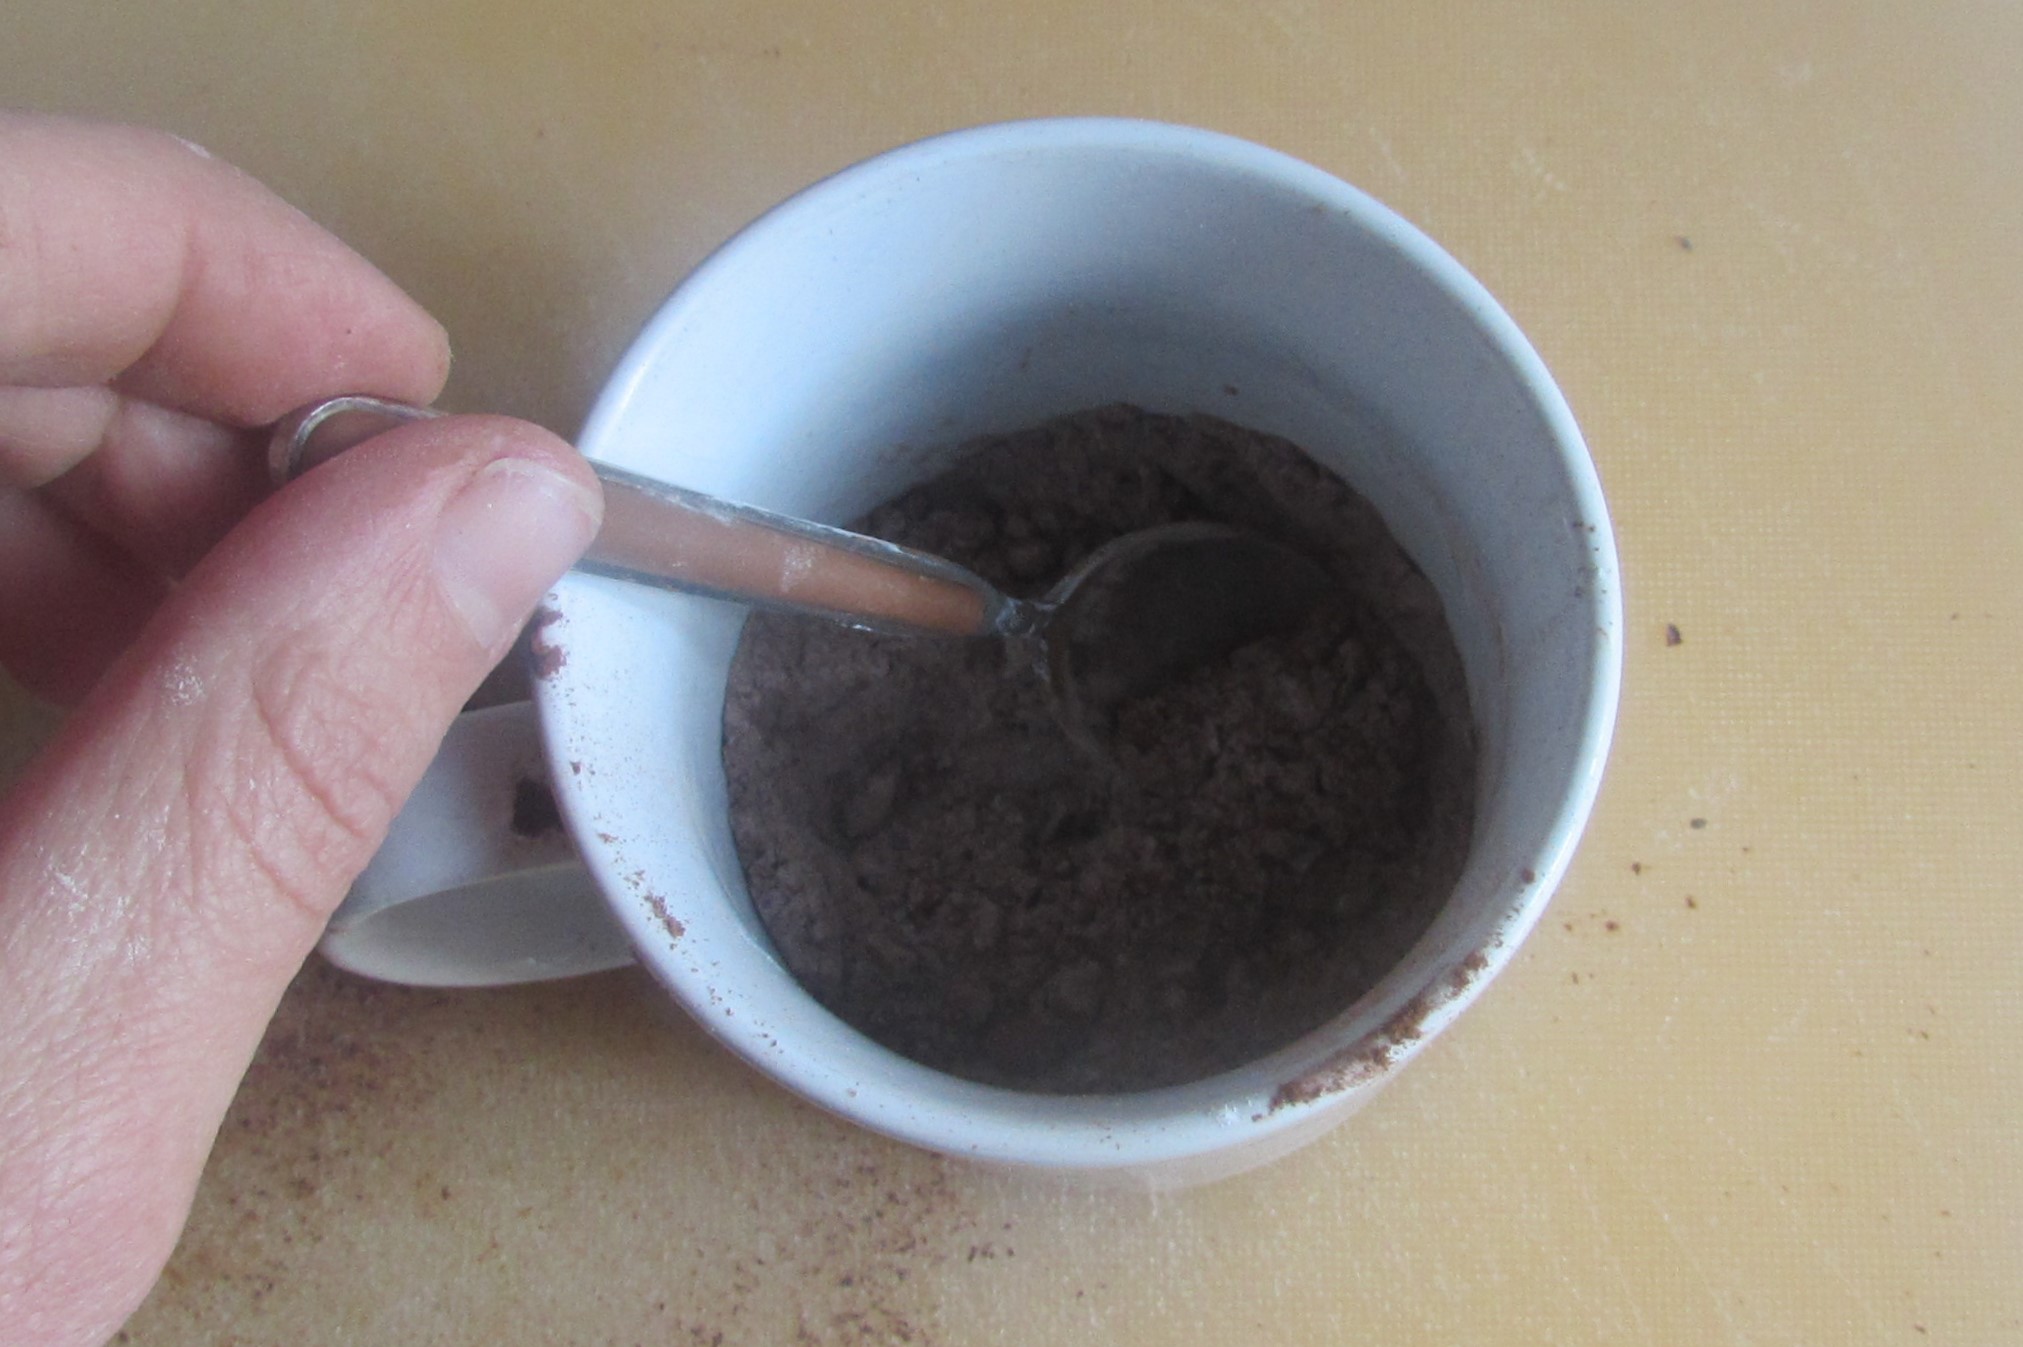 combine chocolate cocoa and sugar in the mug